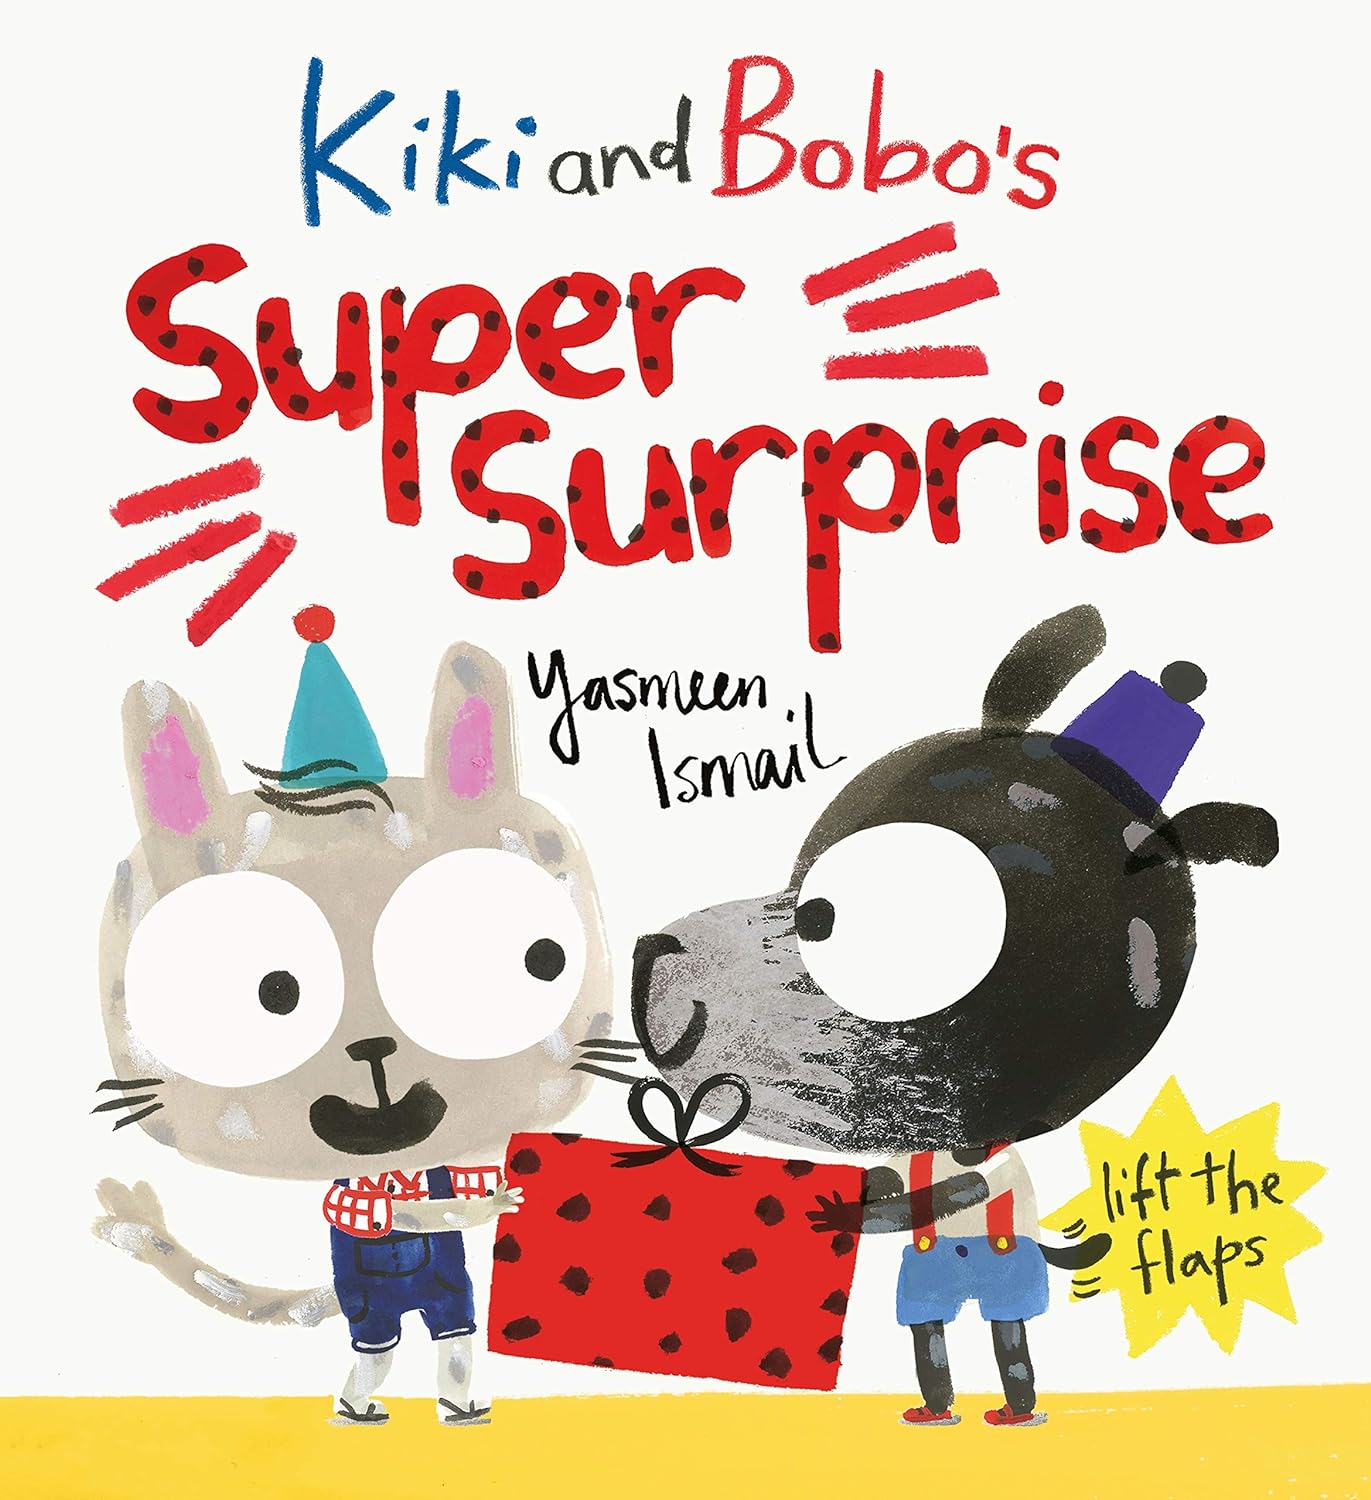 Kiki and Bobo's Birthday Surprise (Paperback)